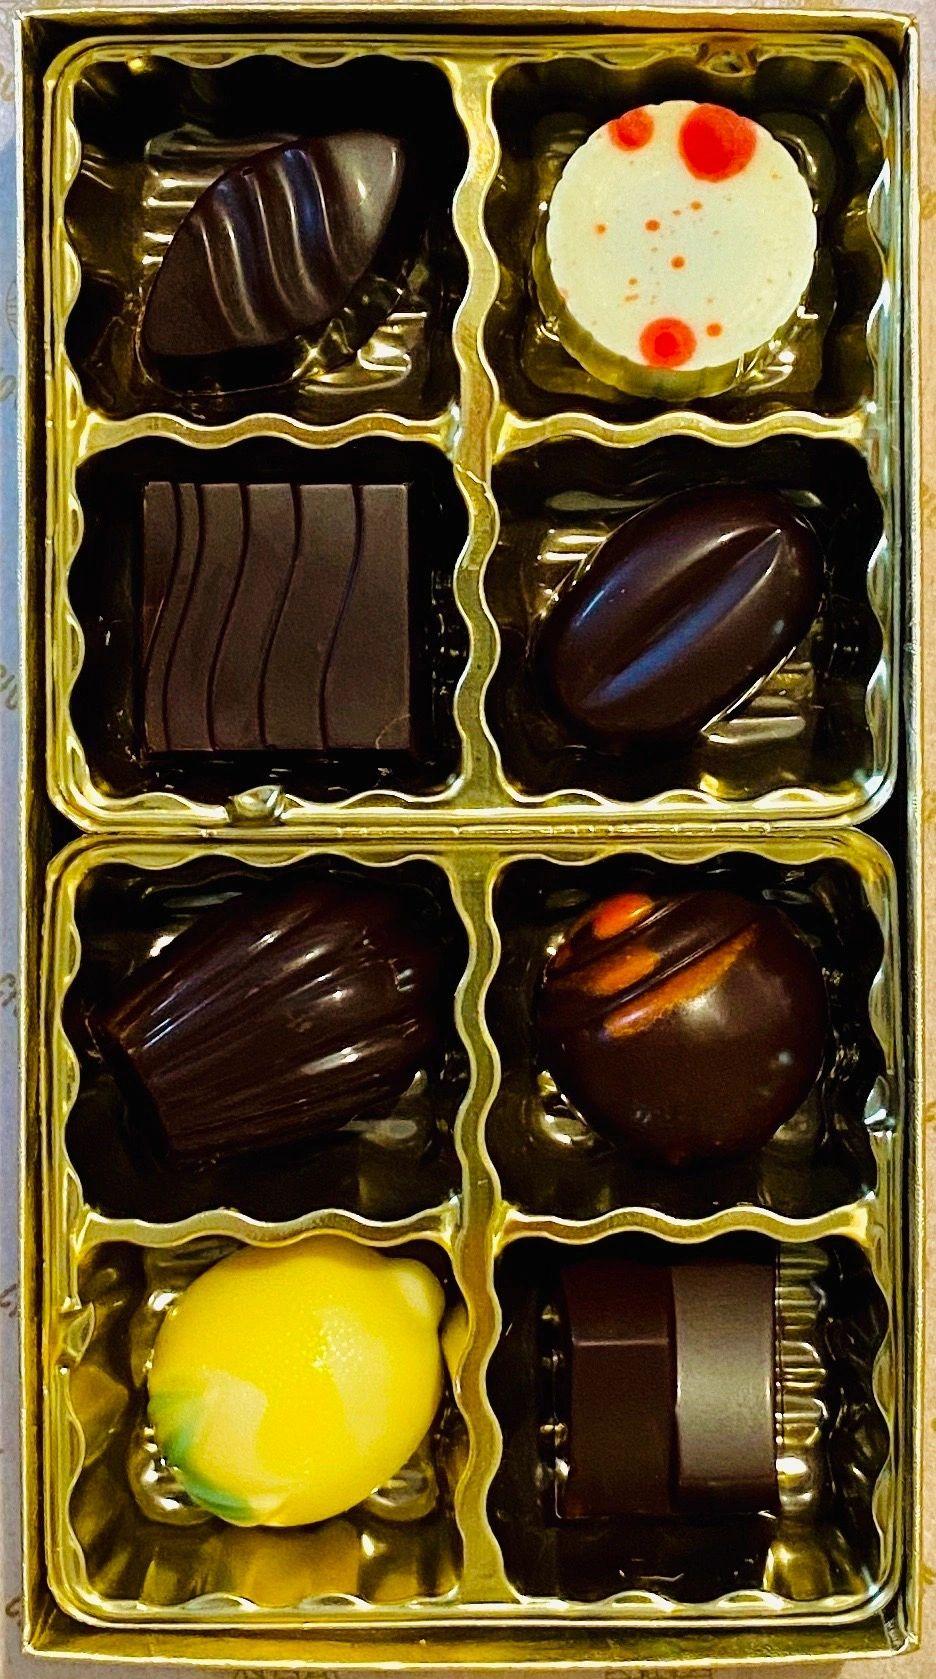 Pure Chocolate  Chocolates Valor